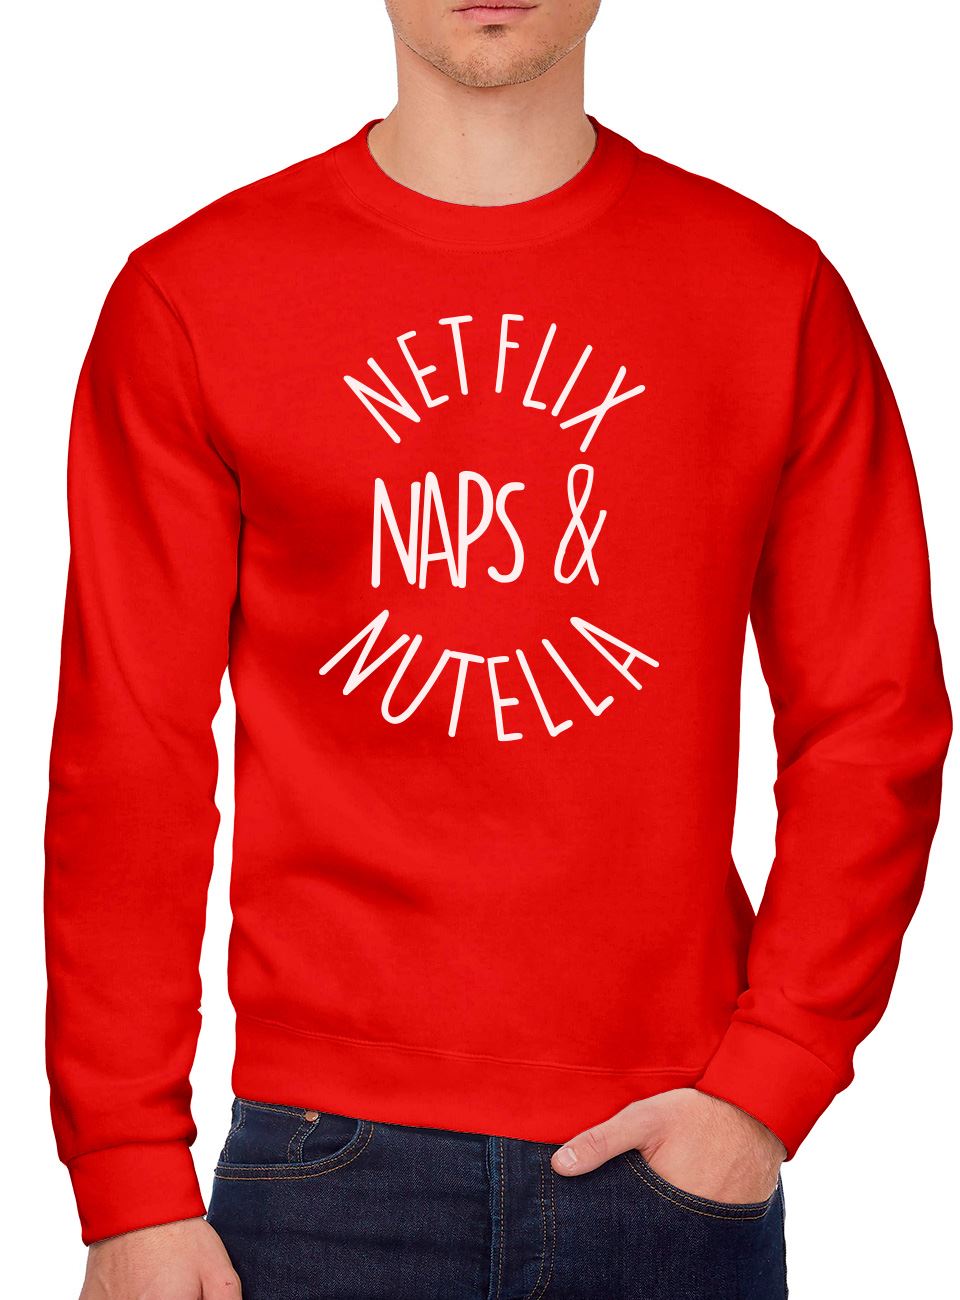 Netflix Naps and Nutella - Youth & Mens Sweatshirt